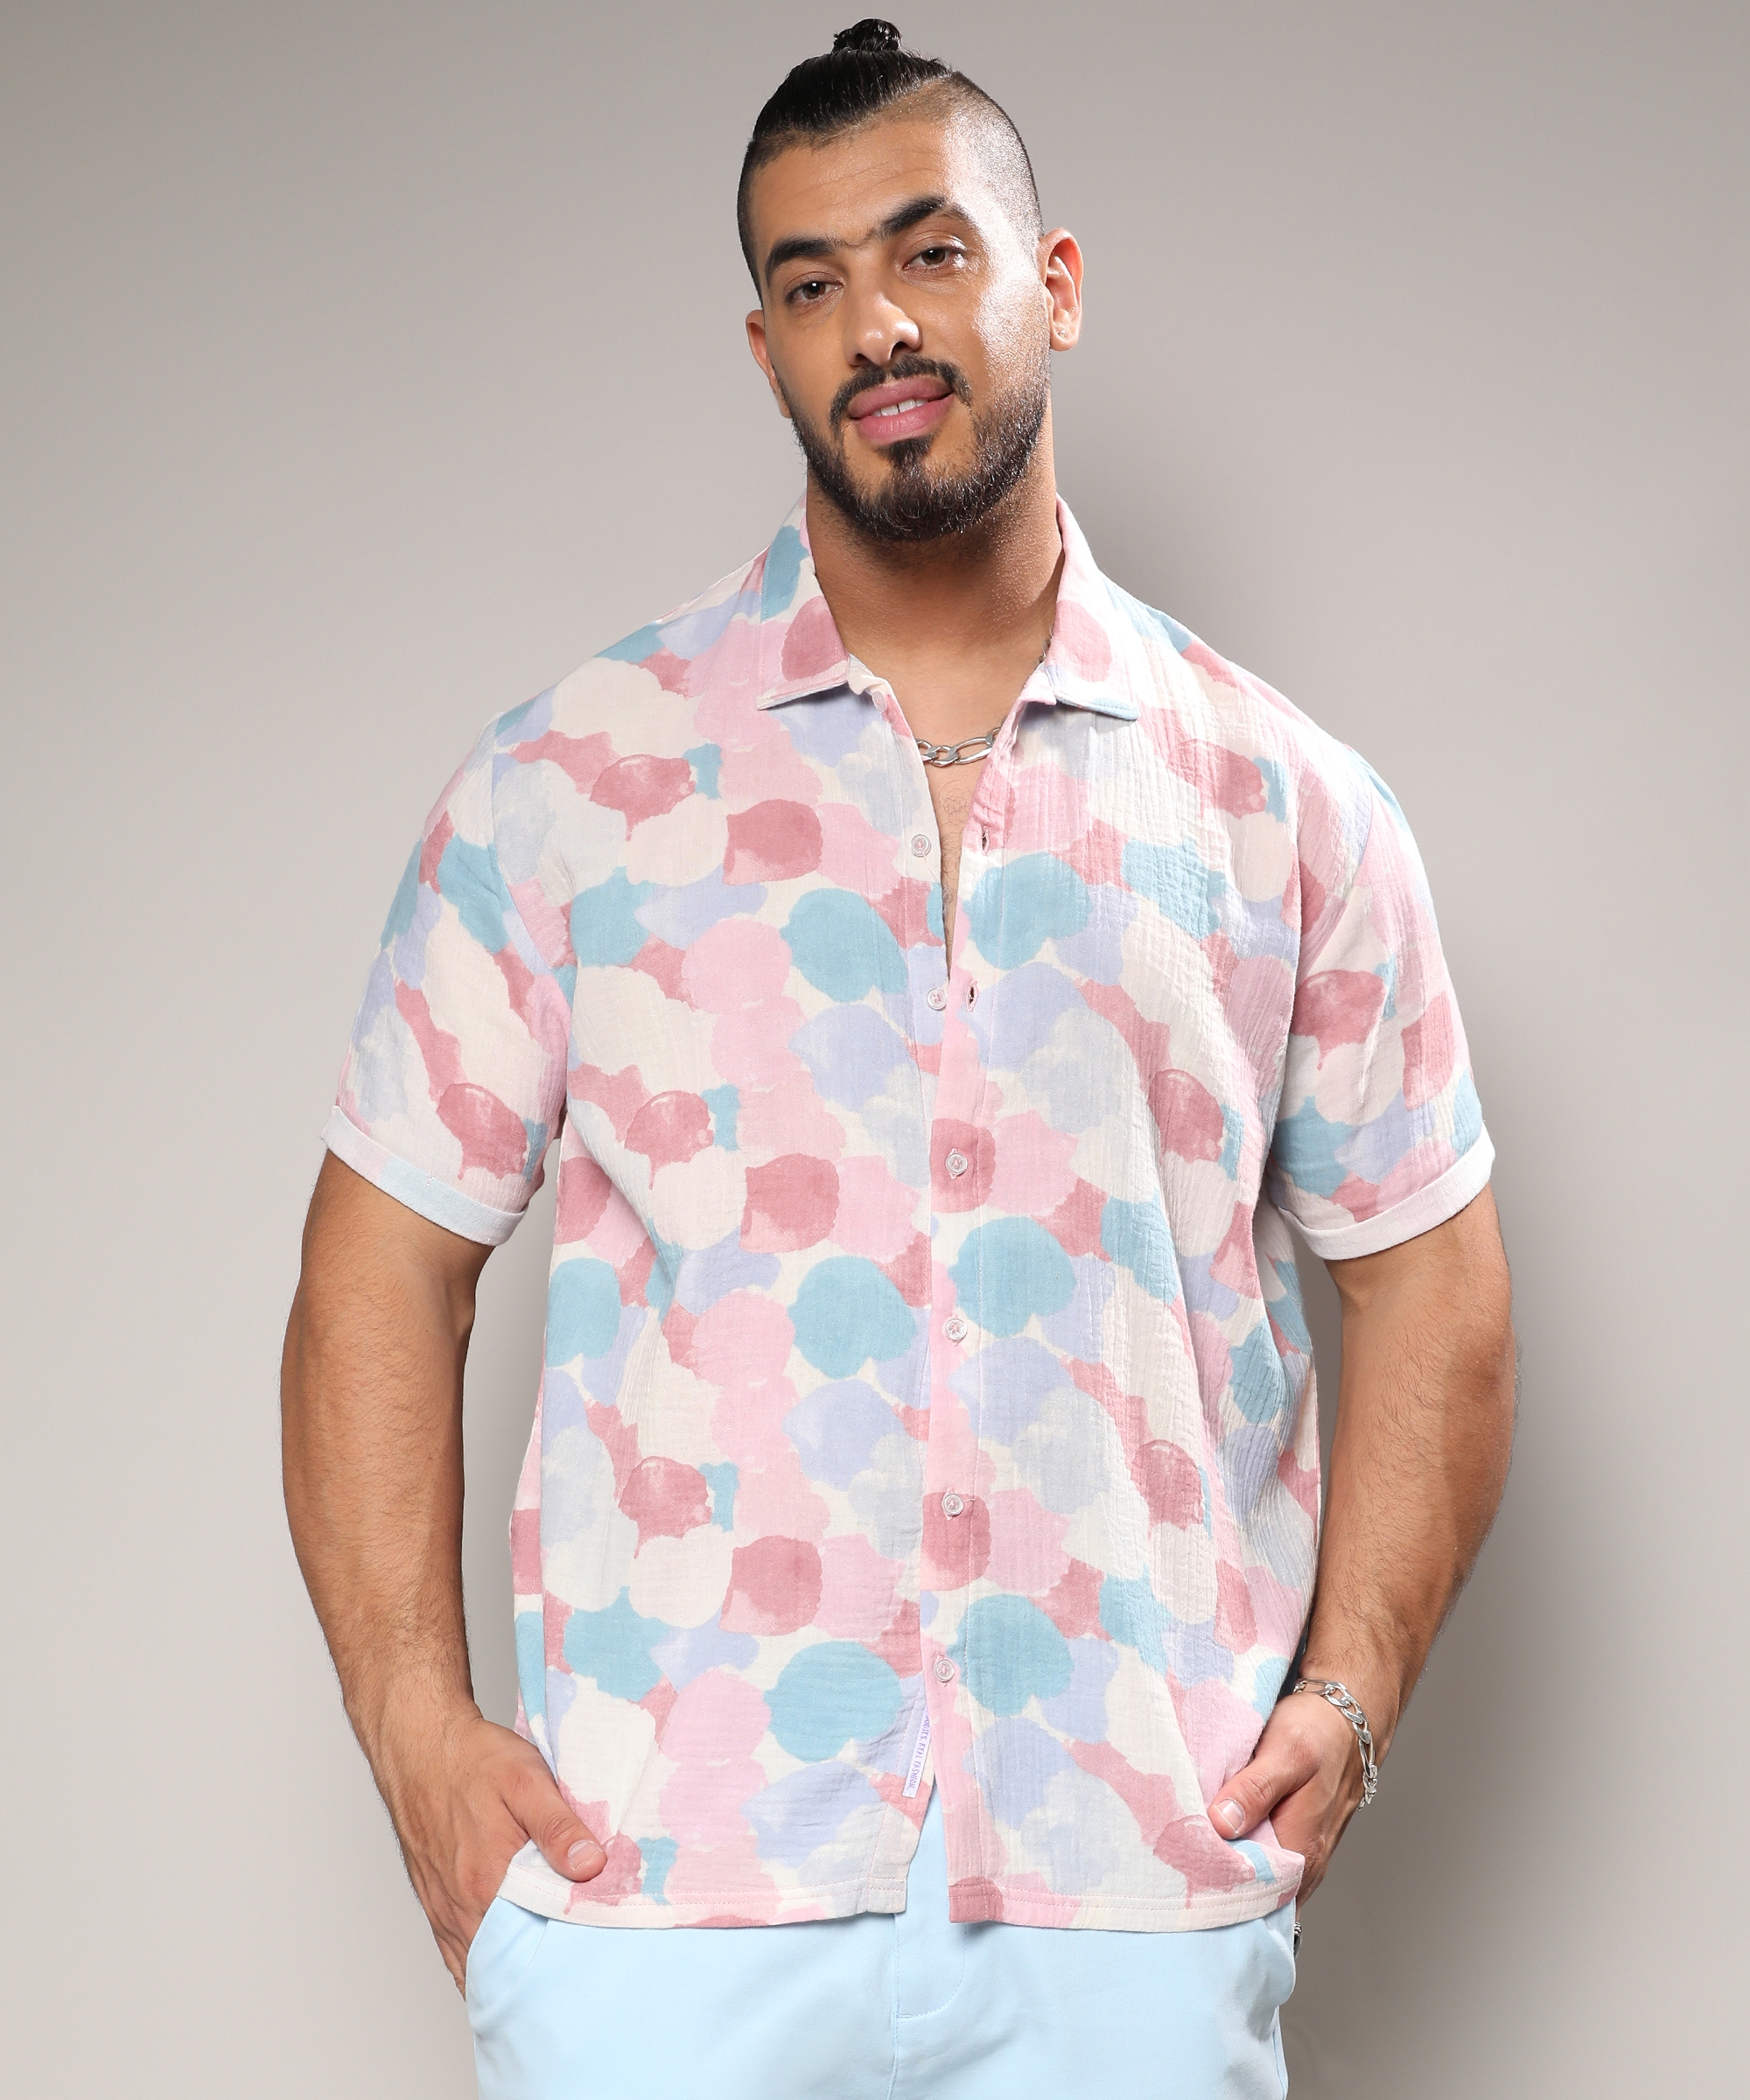 Instafab Plus | Men's Blush Pink & Light Blue Artistic Abstract Shirt